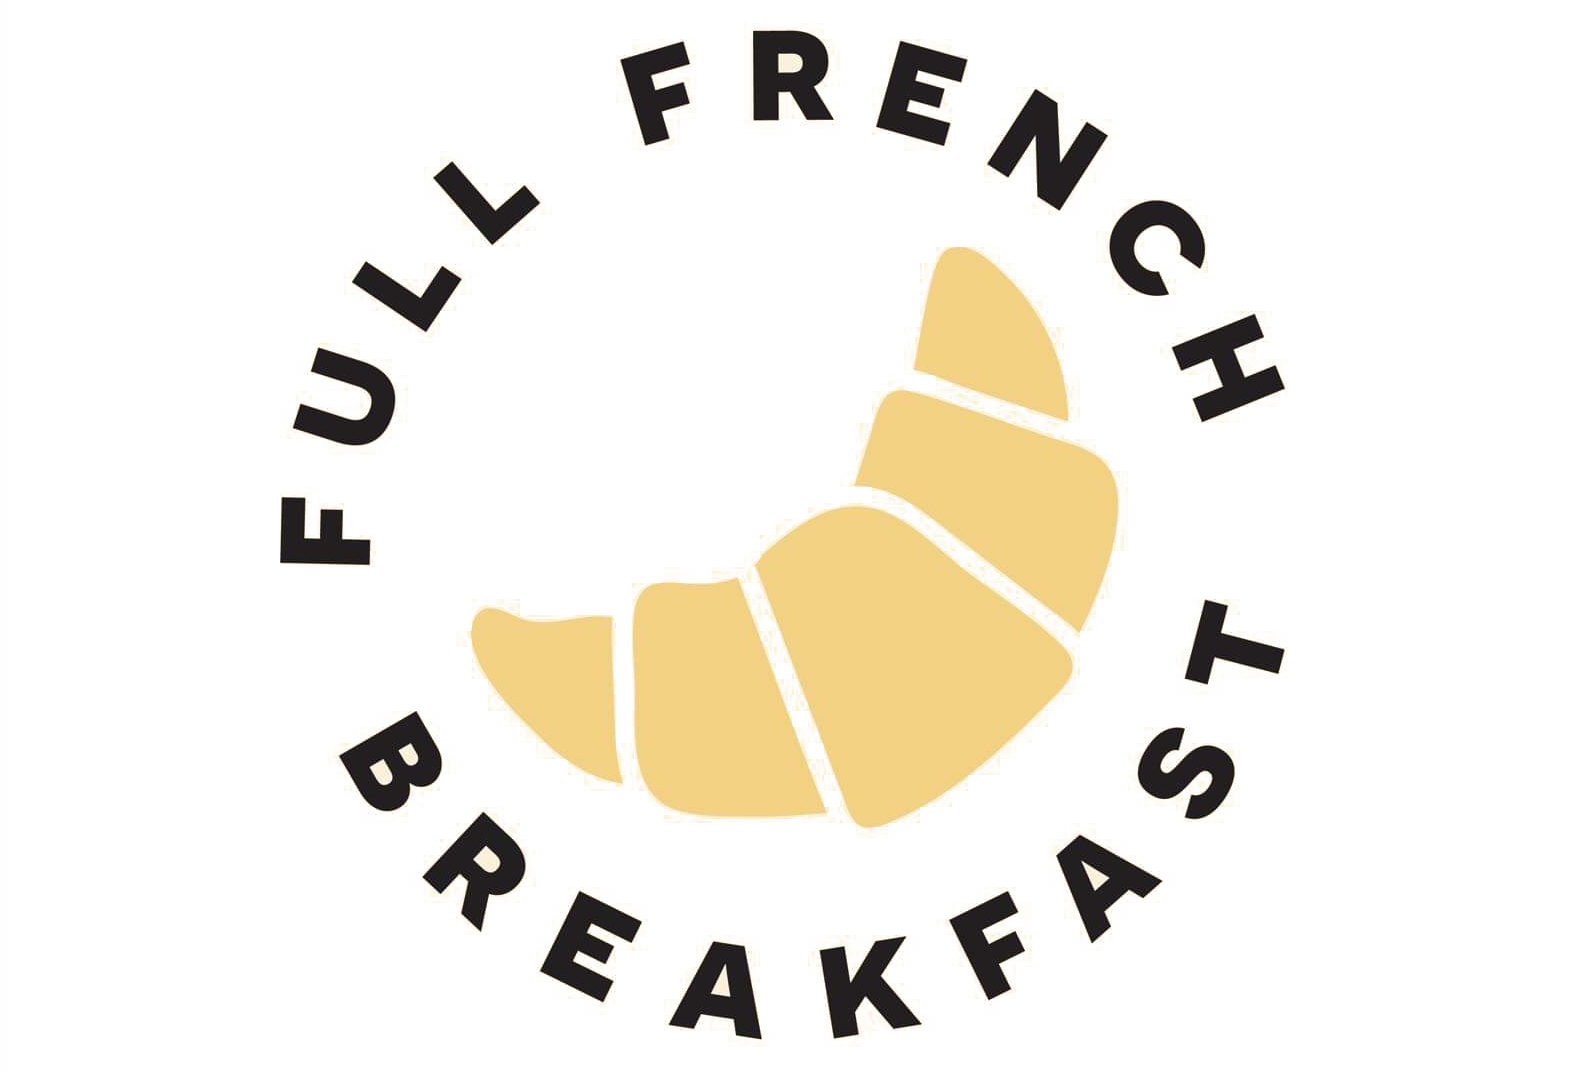 Full french